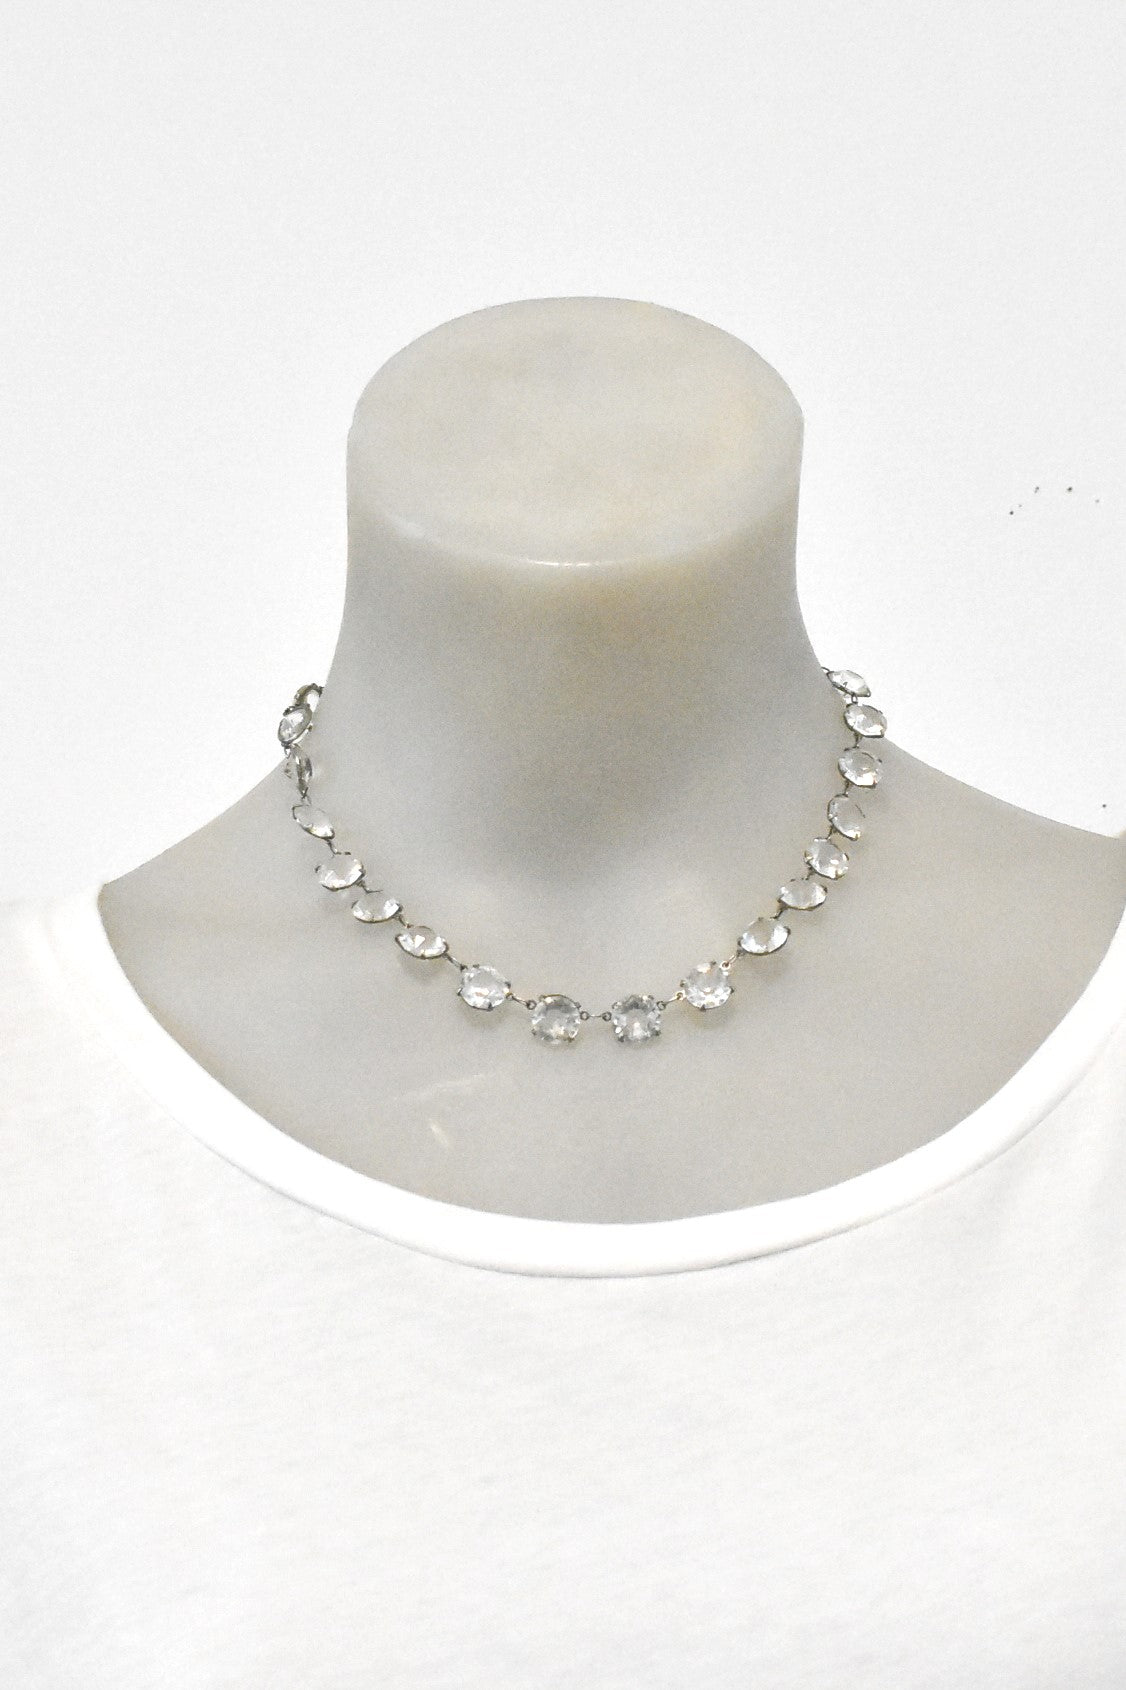 Vintage German cut glass gem necklace